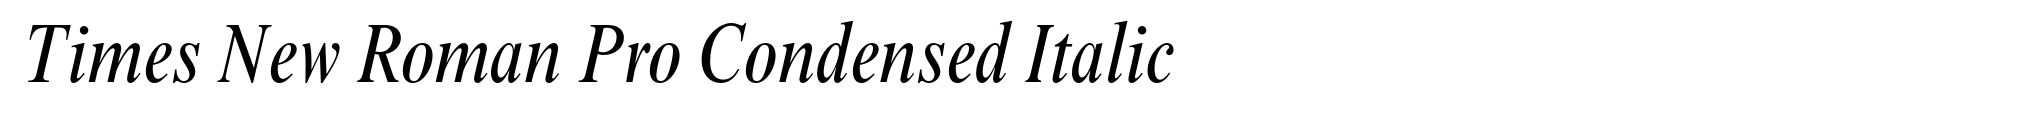 Times New Roman Pro Condensed Italic image